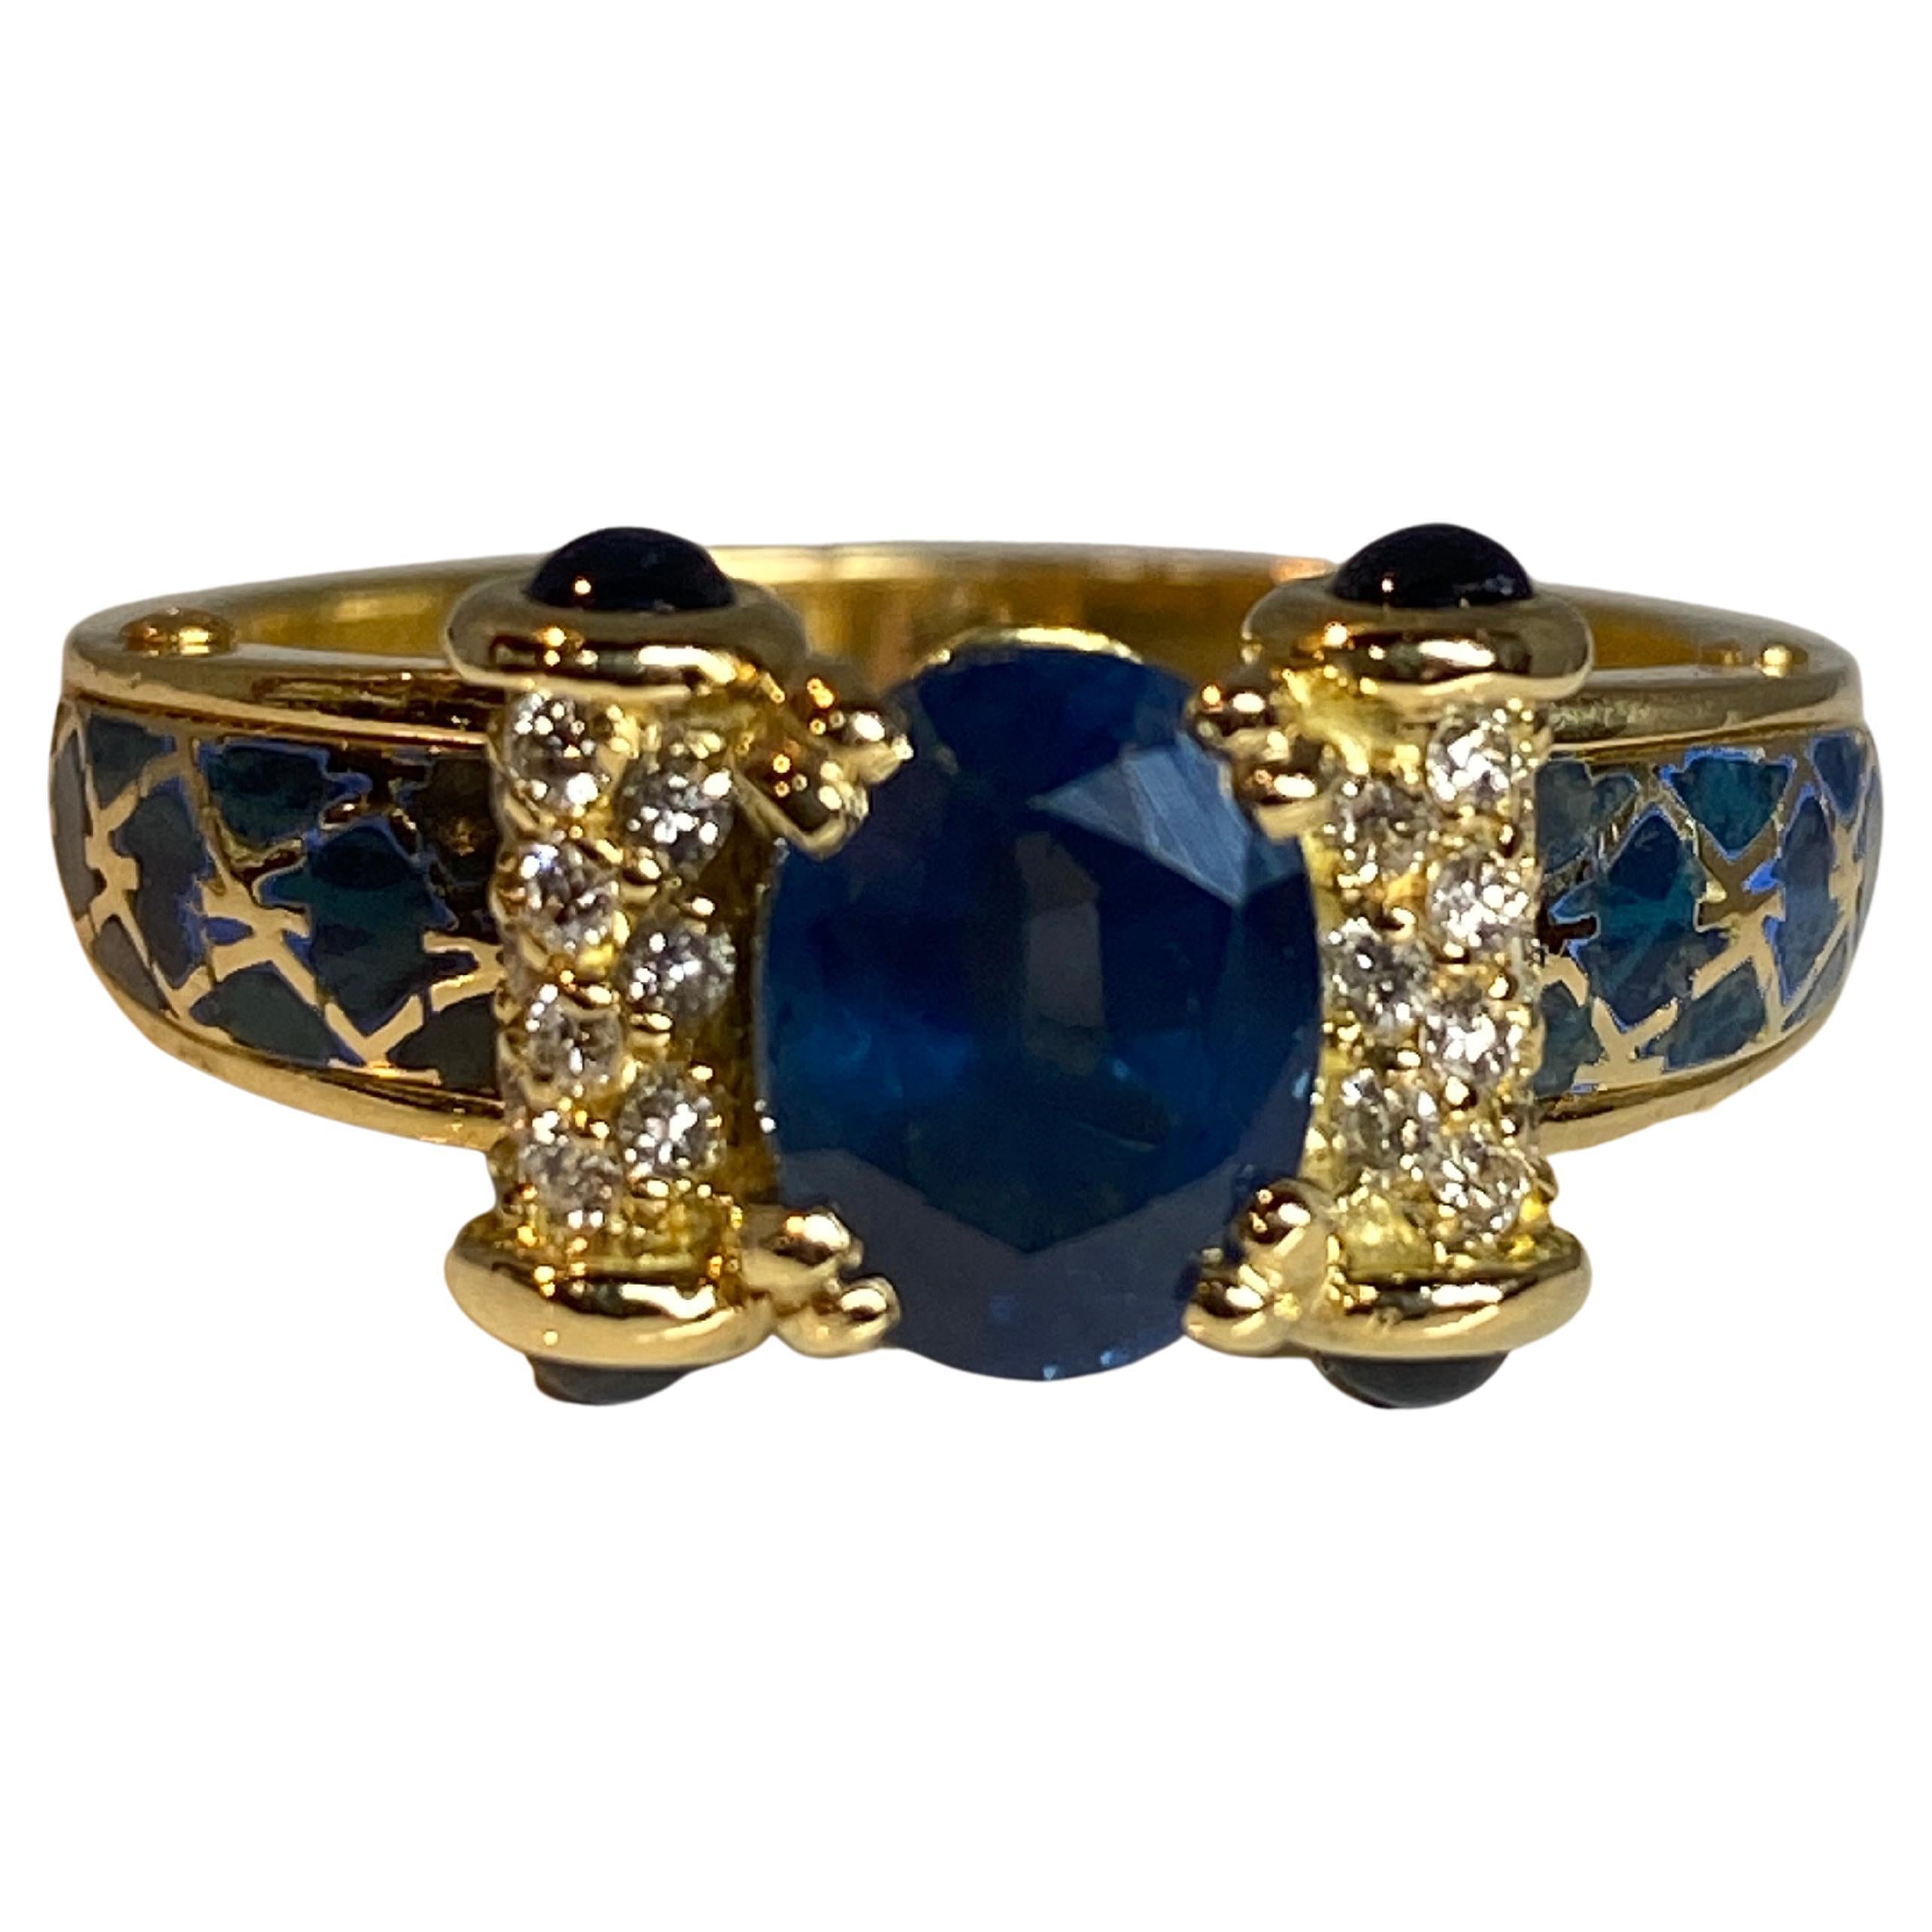 Korloff Ring in 18 Carat Gold: Sapphires, Diamonds, Blue Enamel